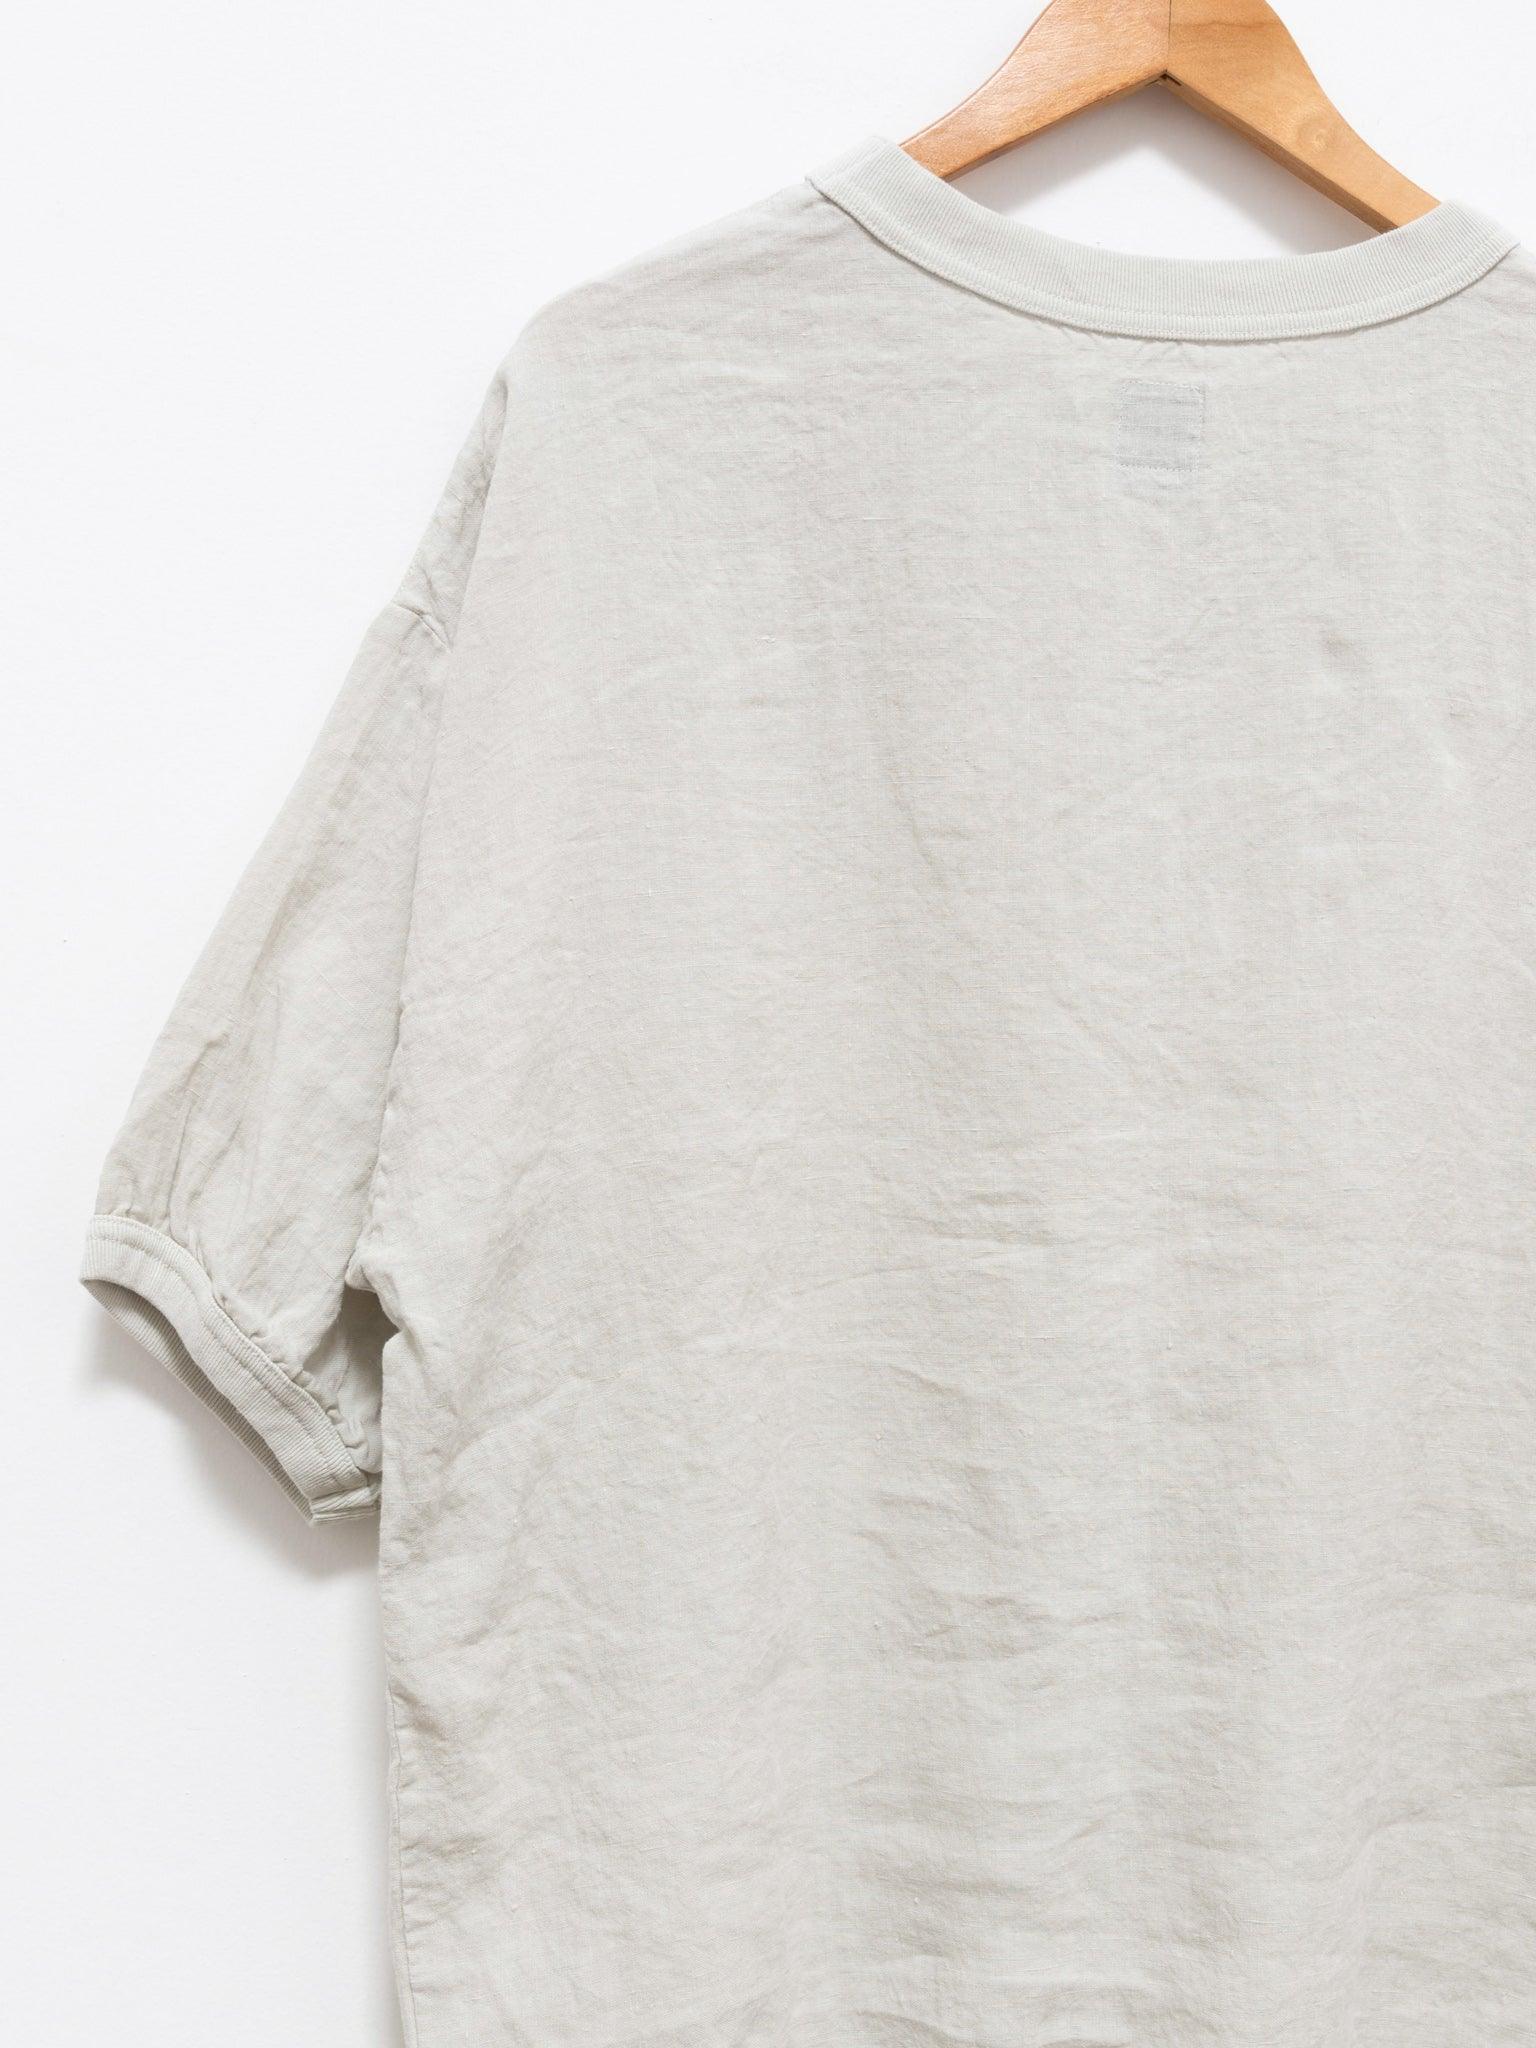 Namu Shop - Maillot Linen Big Sweatshirt Tee - Ivory